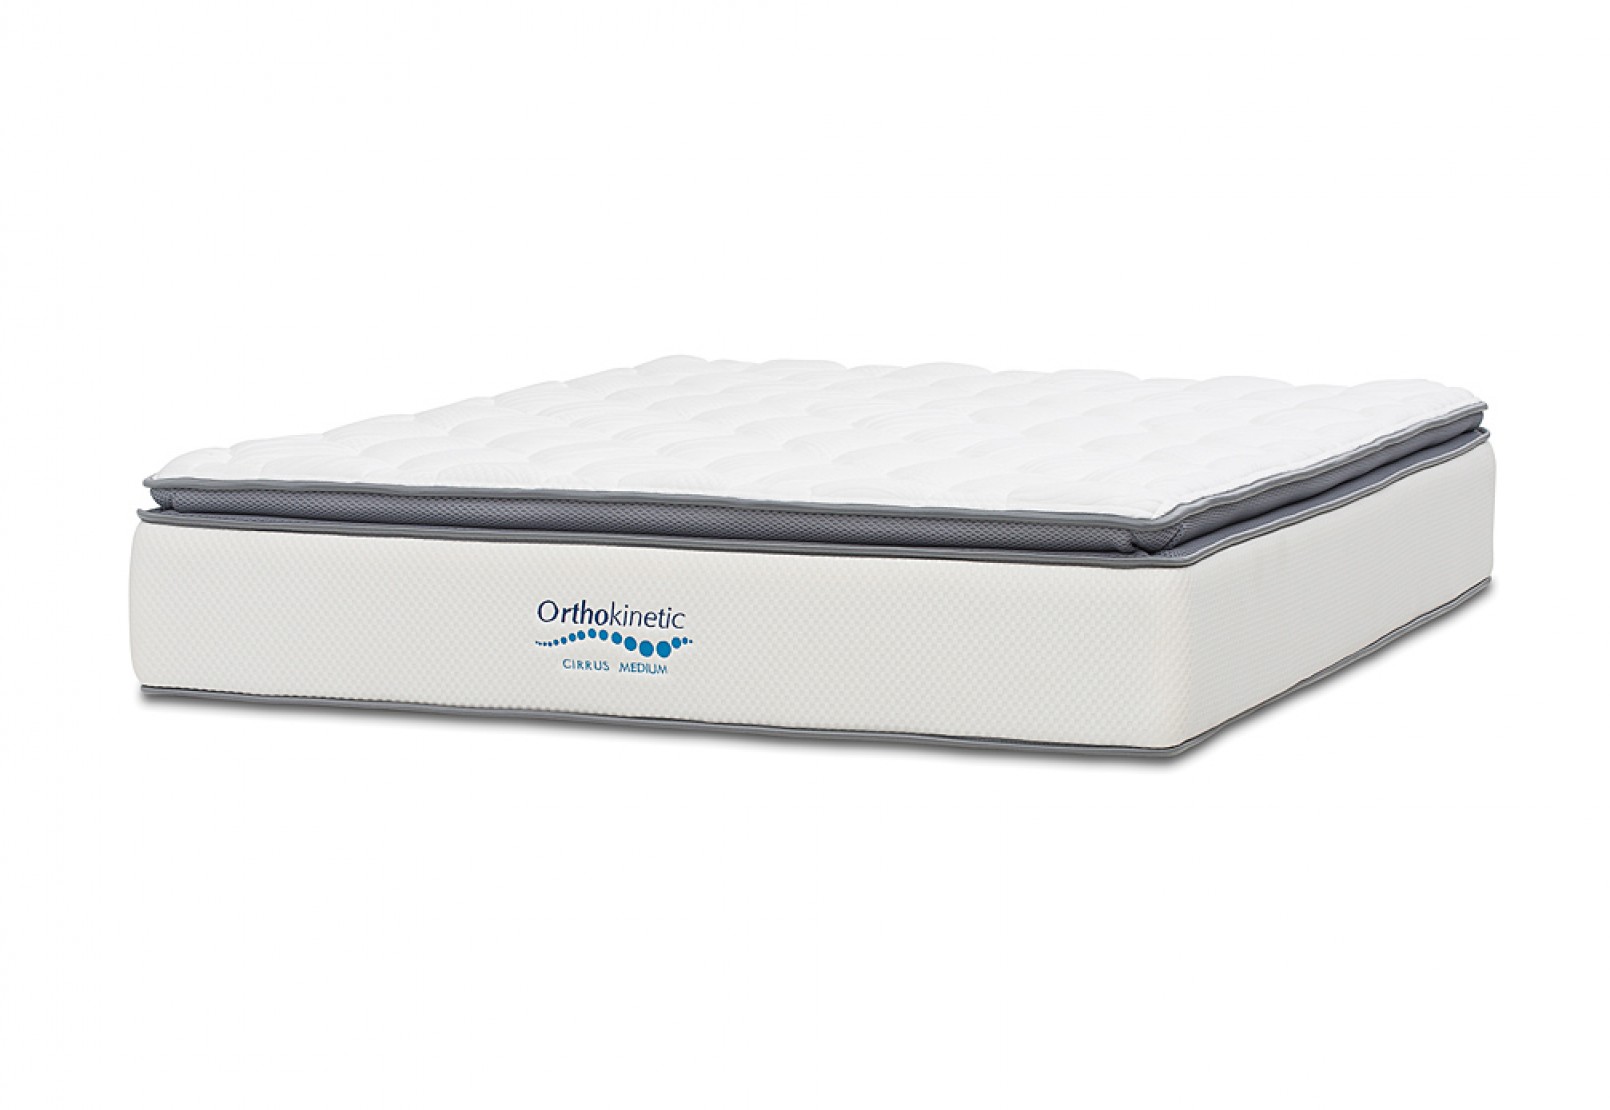 orthokinetic cirrus mattress review